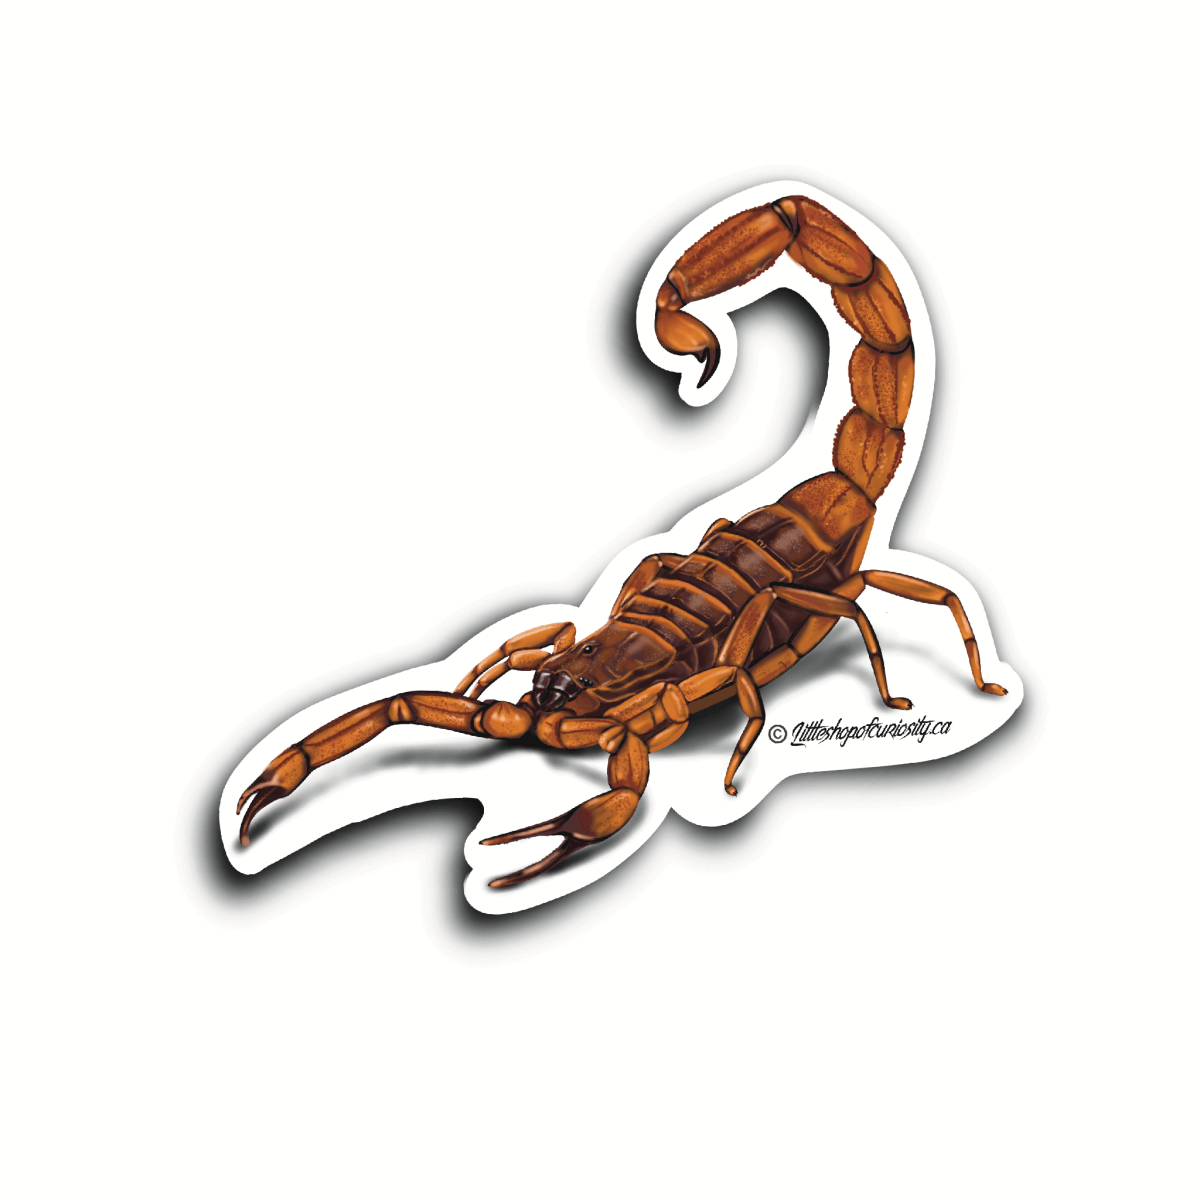 Tanzanian Bark Scorpion Sticker - Colour Sticker - Little Shop of Curiosity